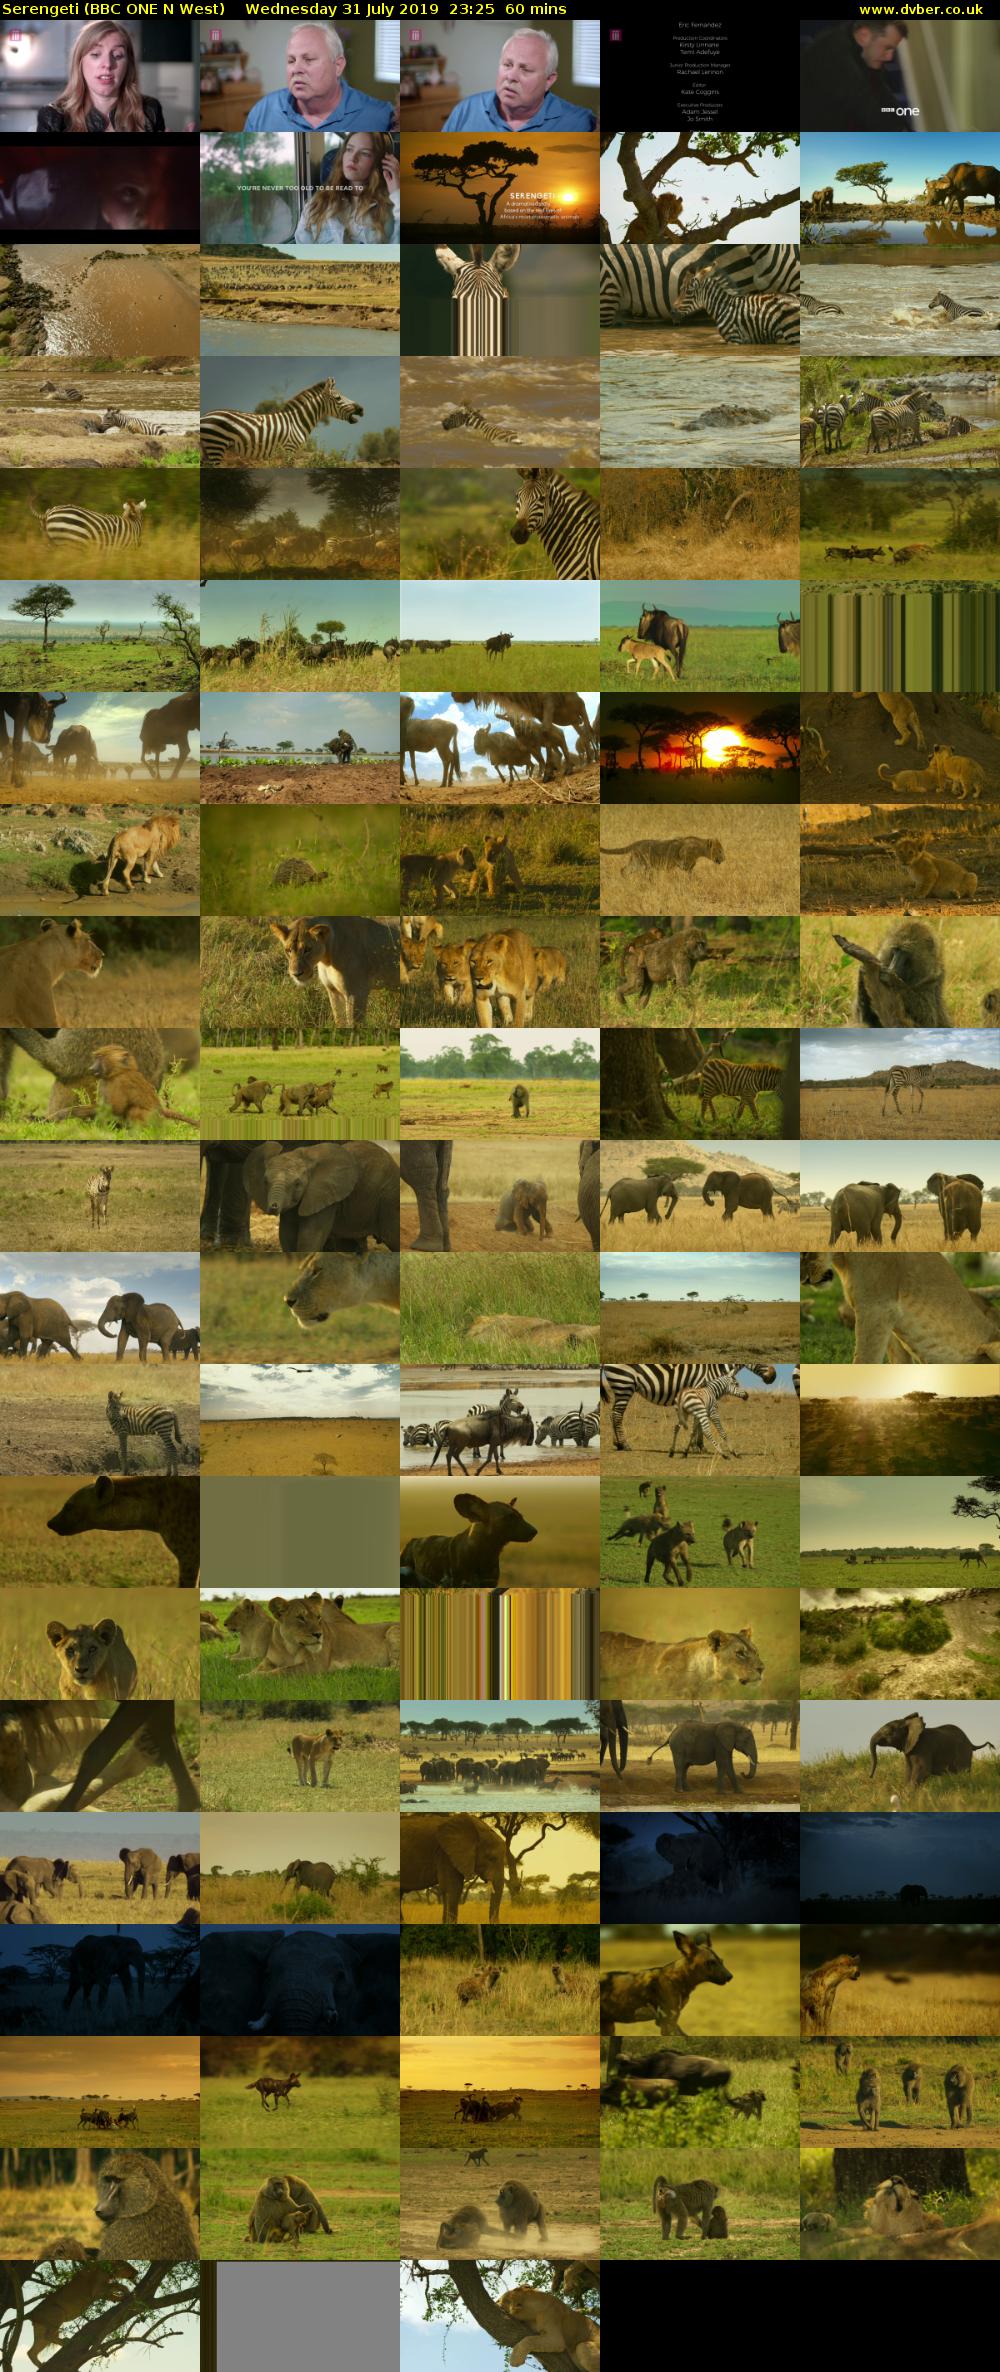 Serengeti (BBC ONE N West) Wednesday 31 July 2019 23:25 - 00:25